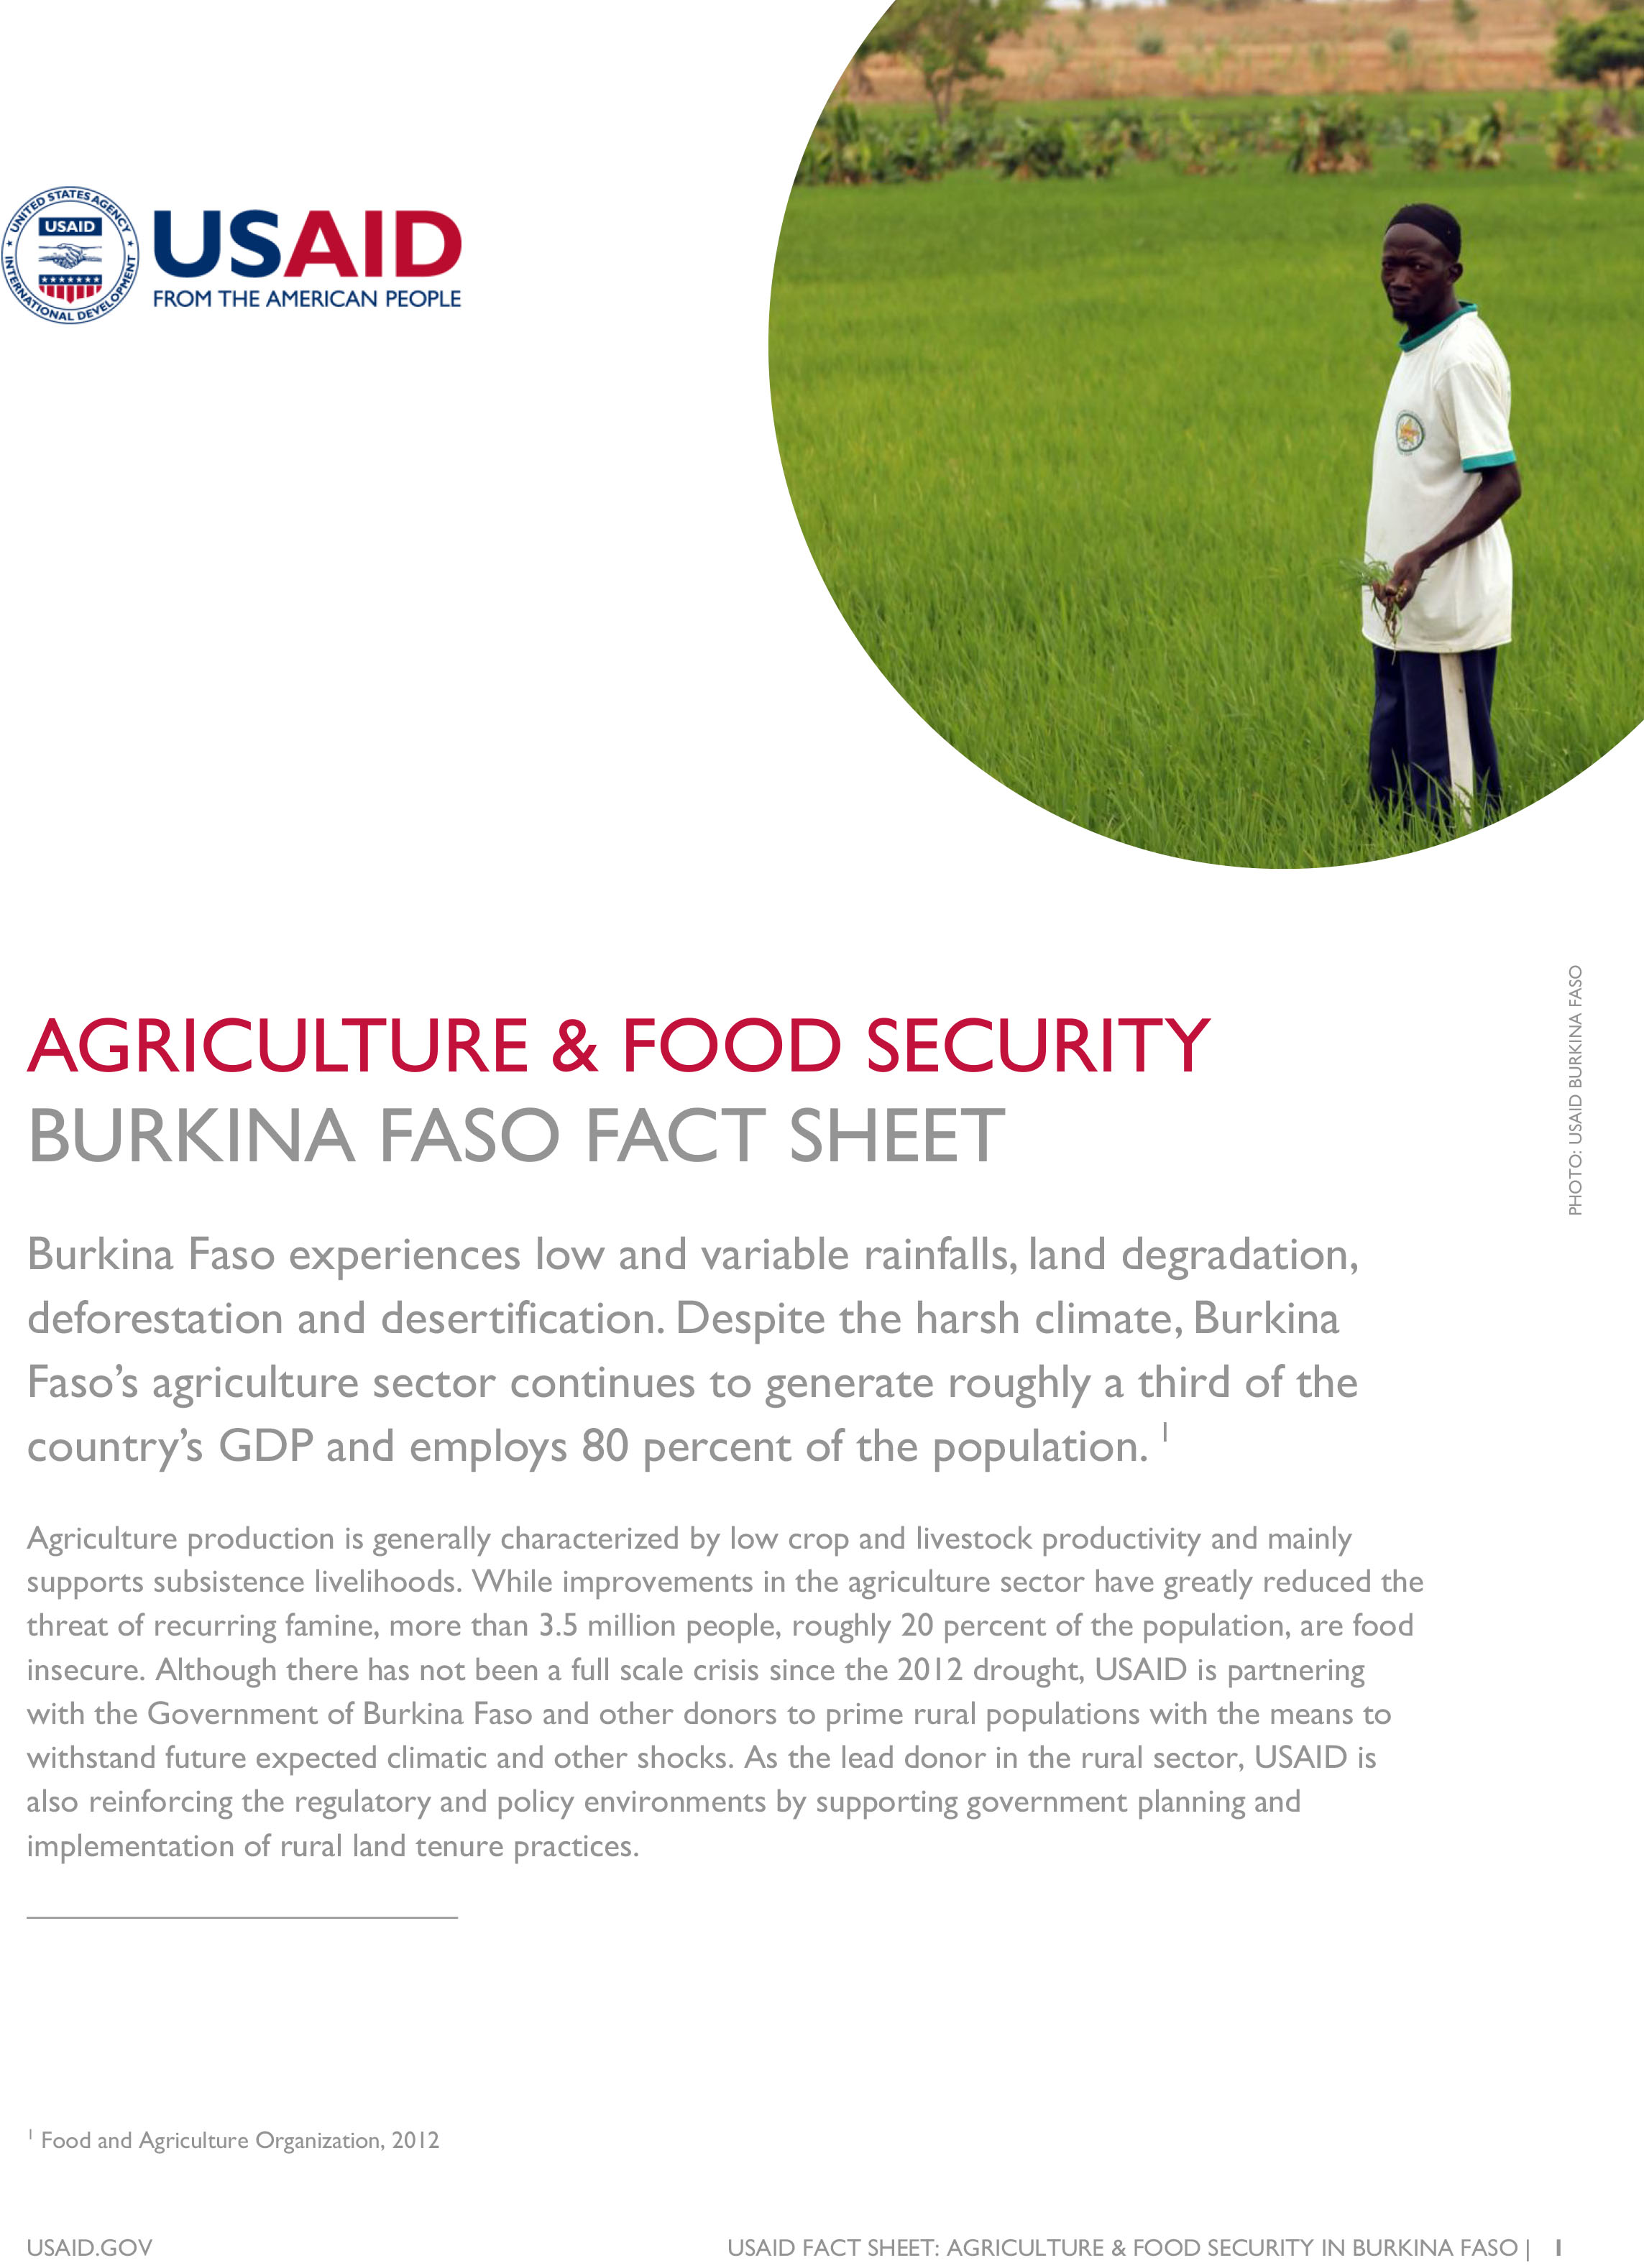 Burkina Faso Fact Sheet-Agriculture & Food Security